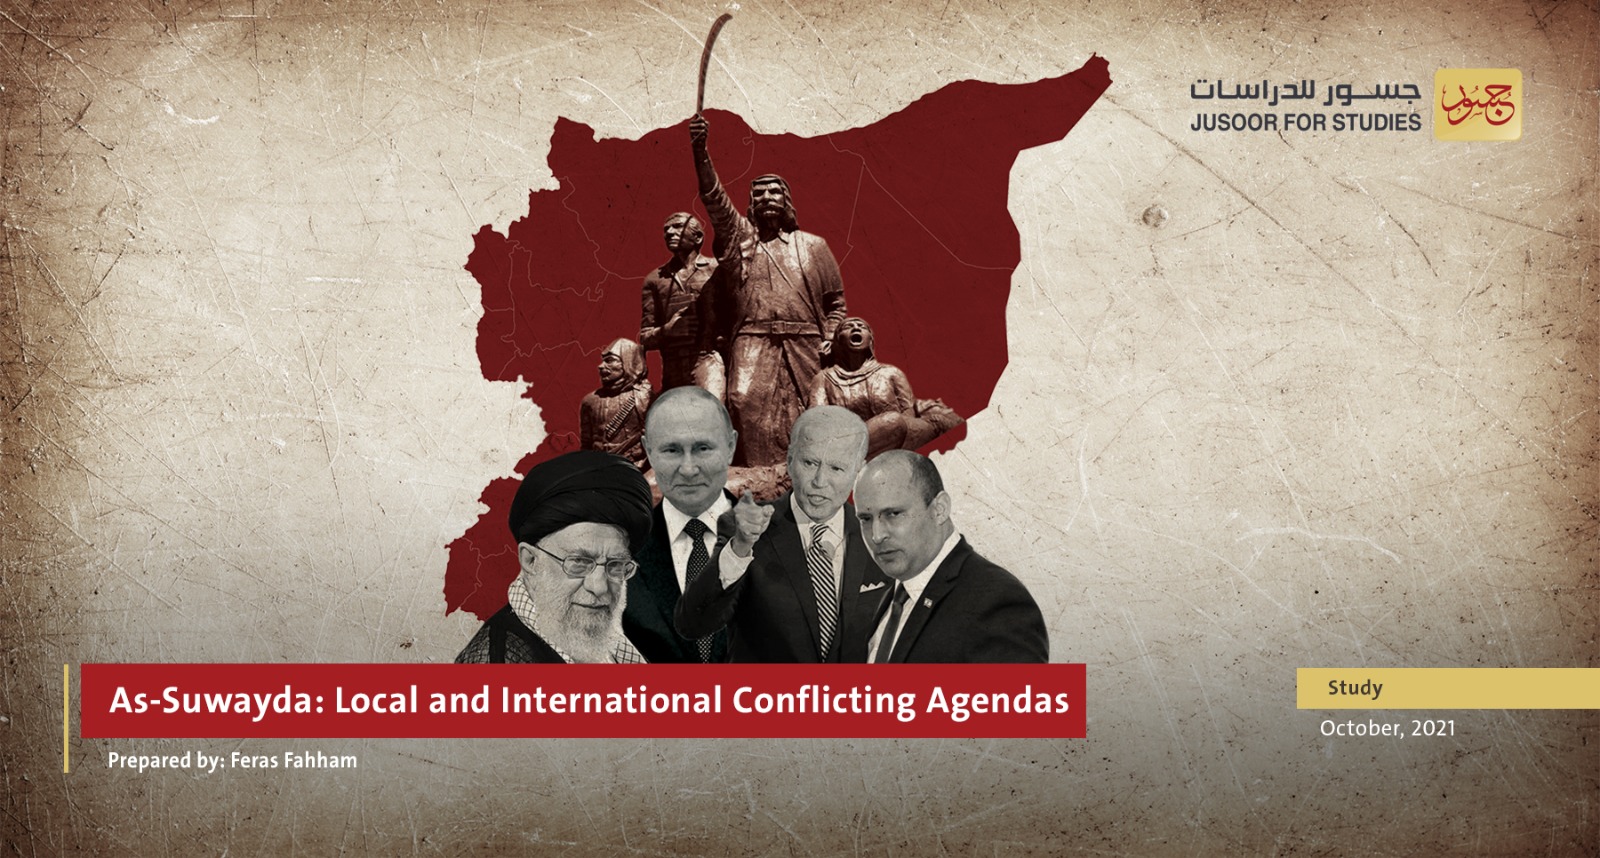 As-Suwayda: Local and International Conflicting Agendas